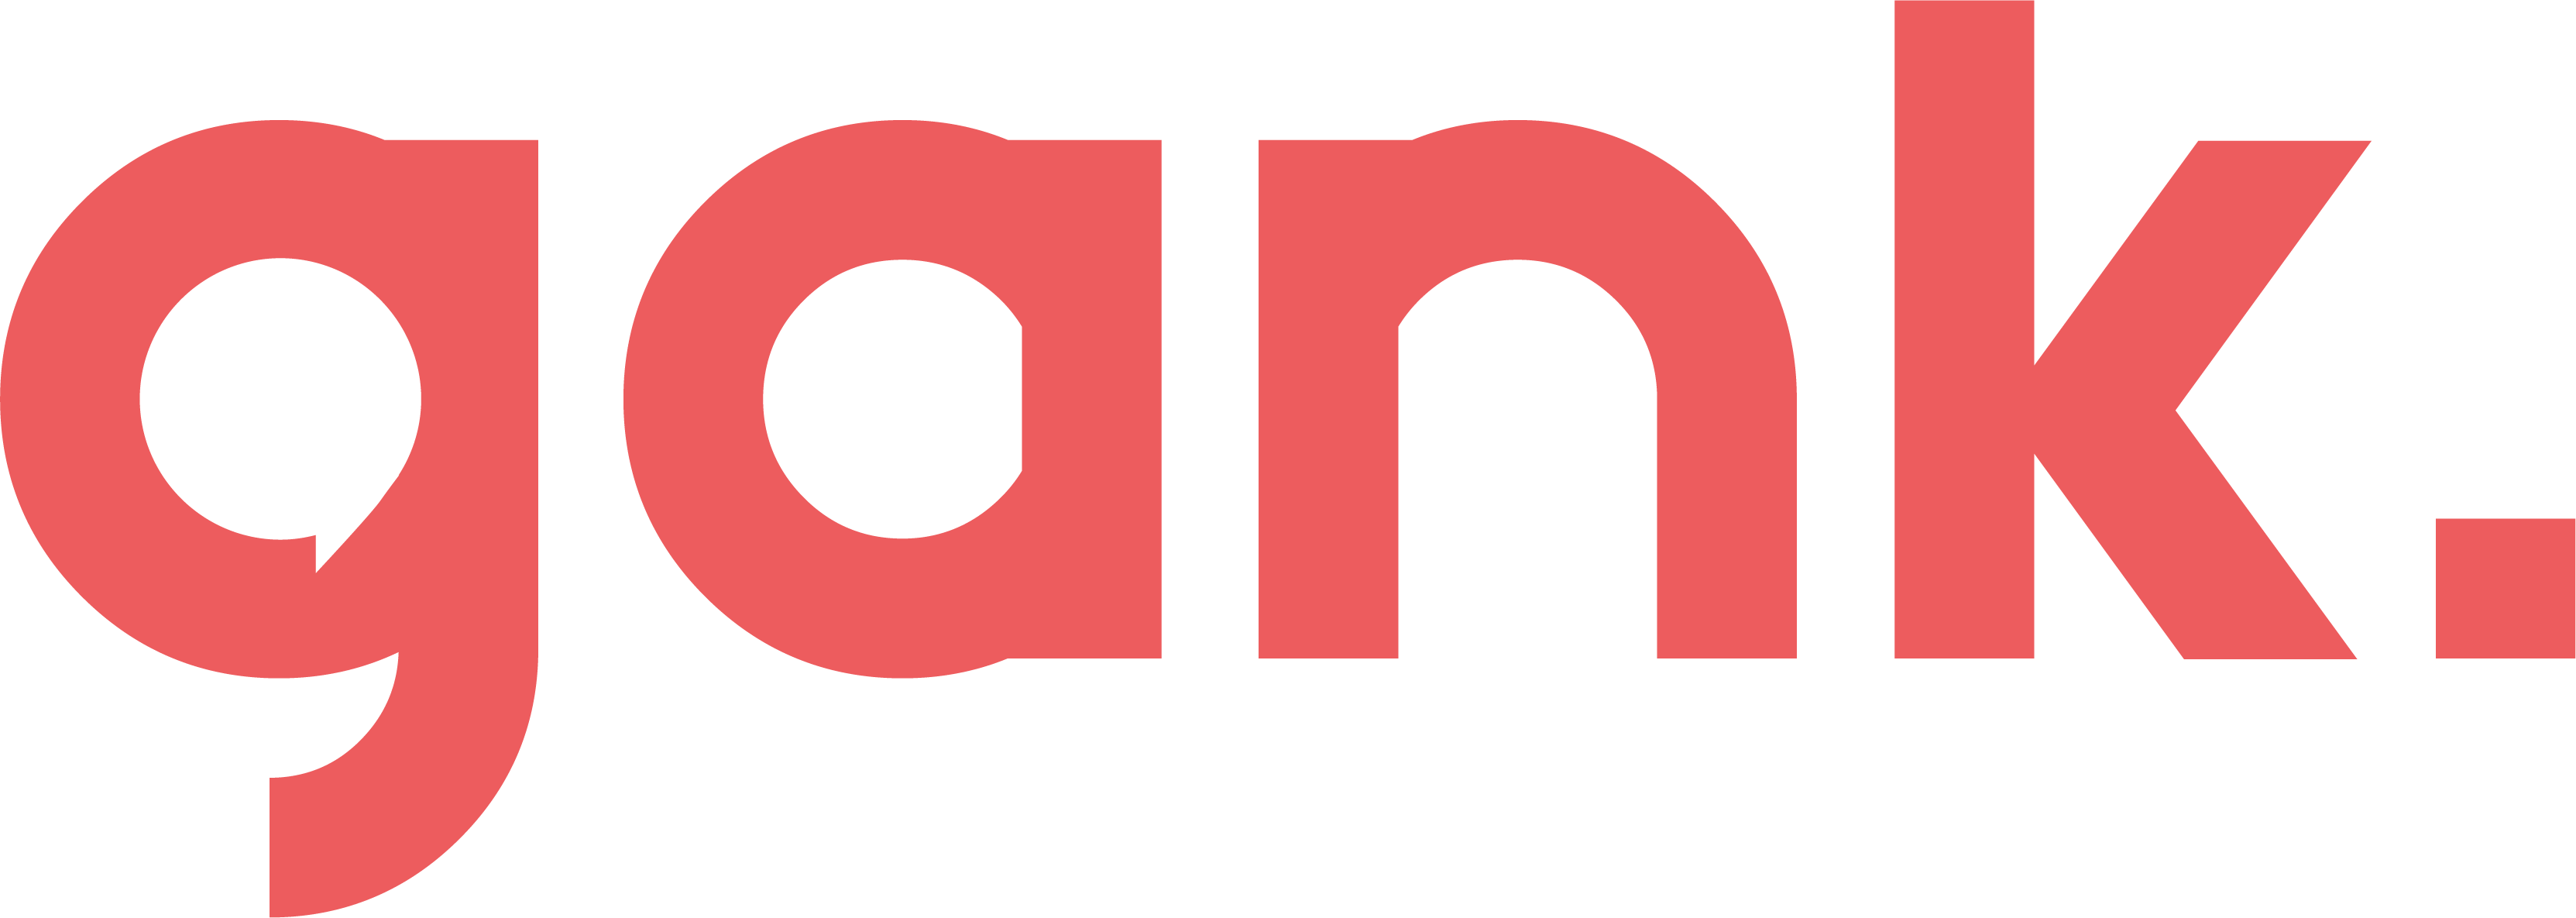 Gank logo